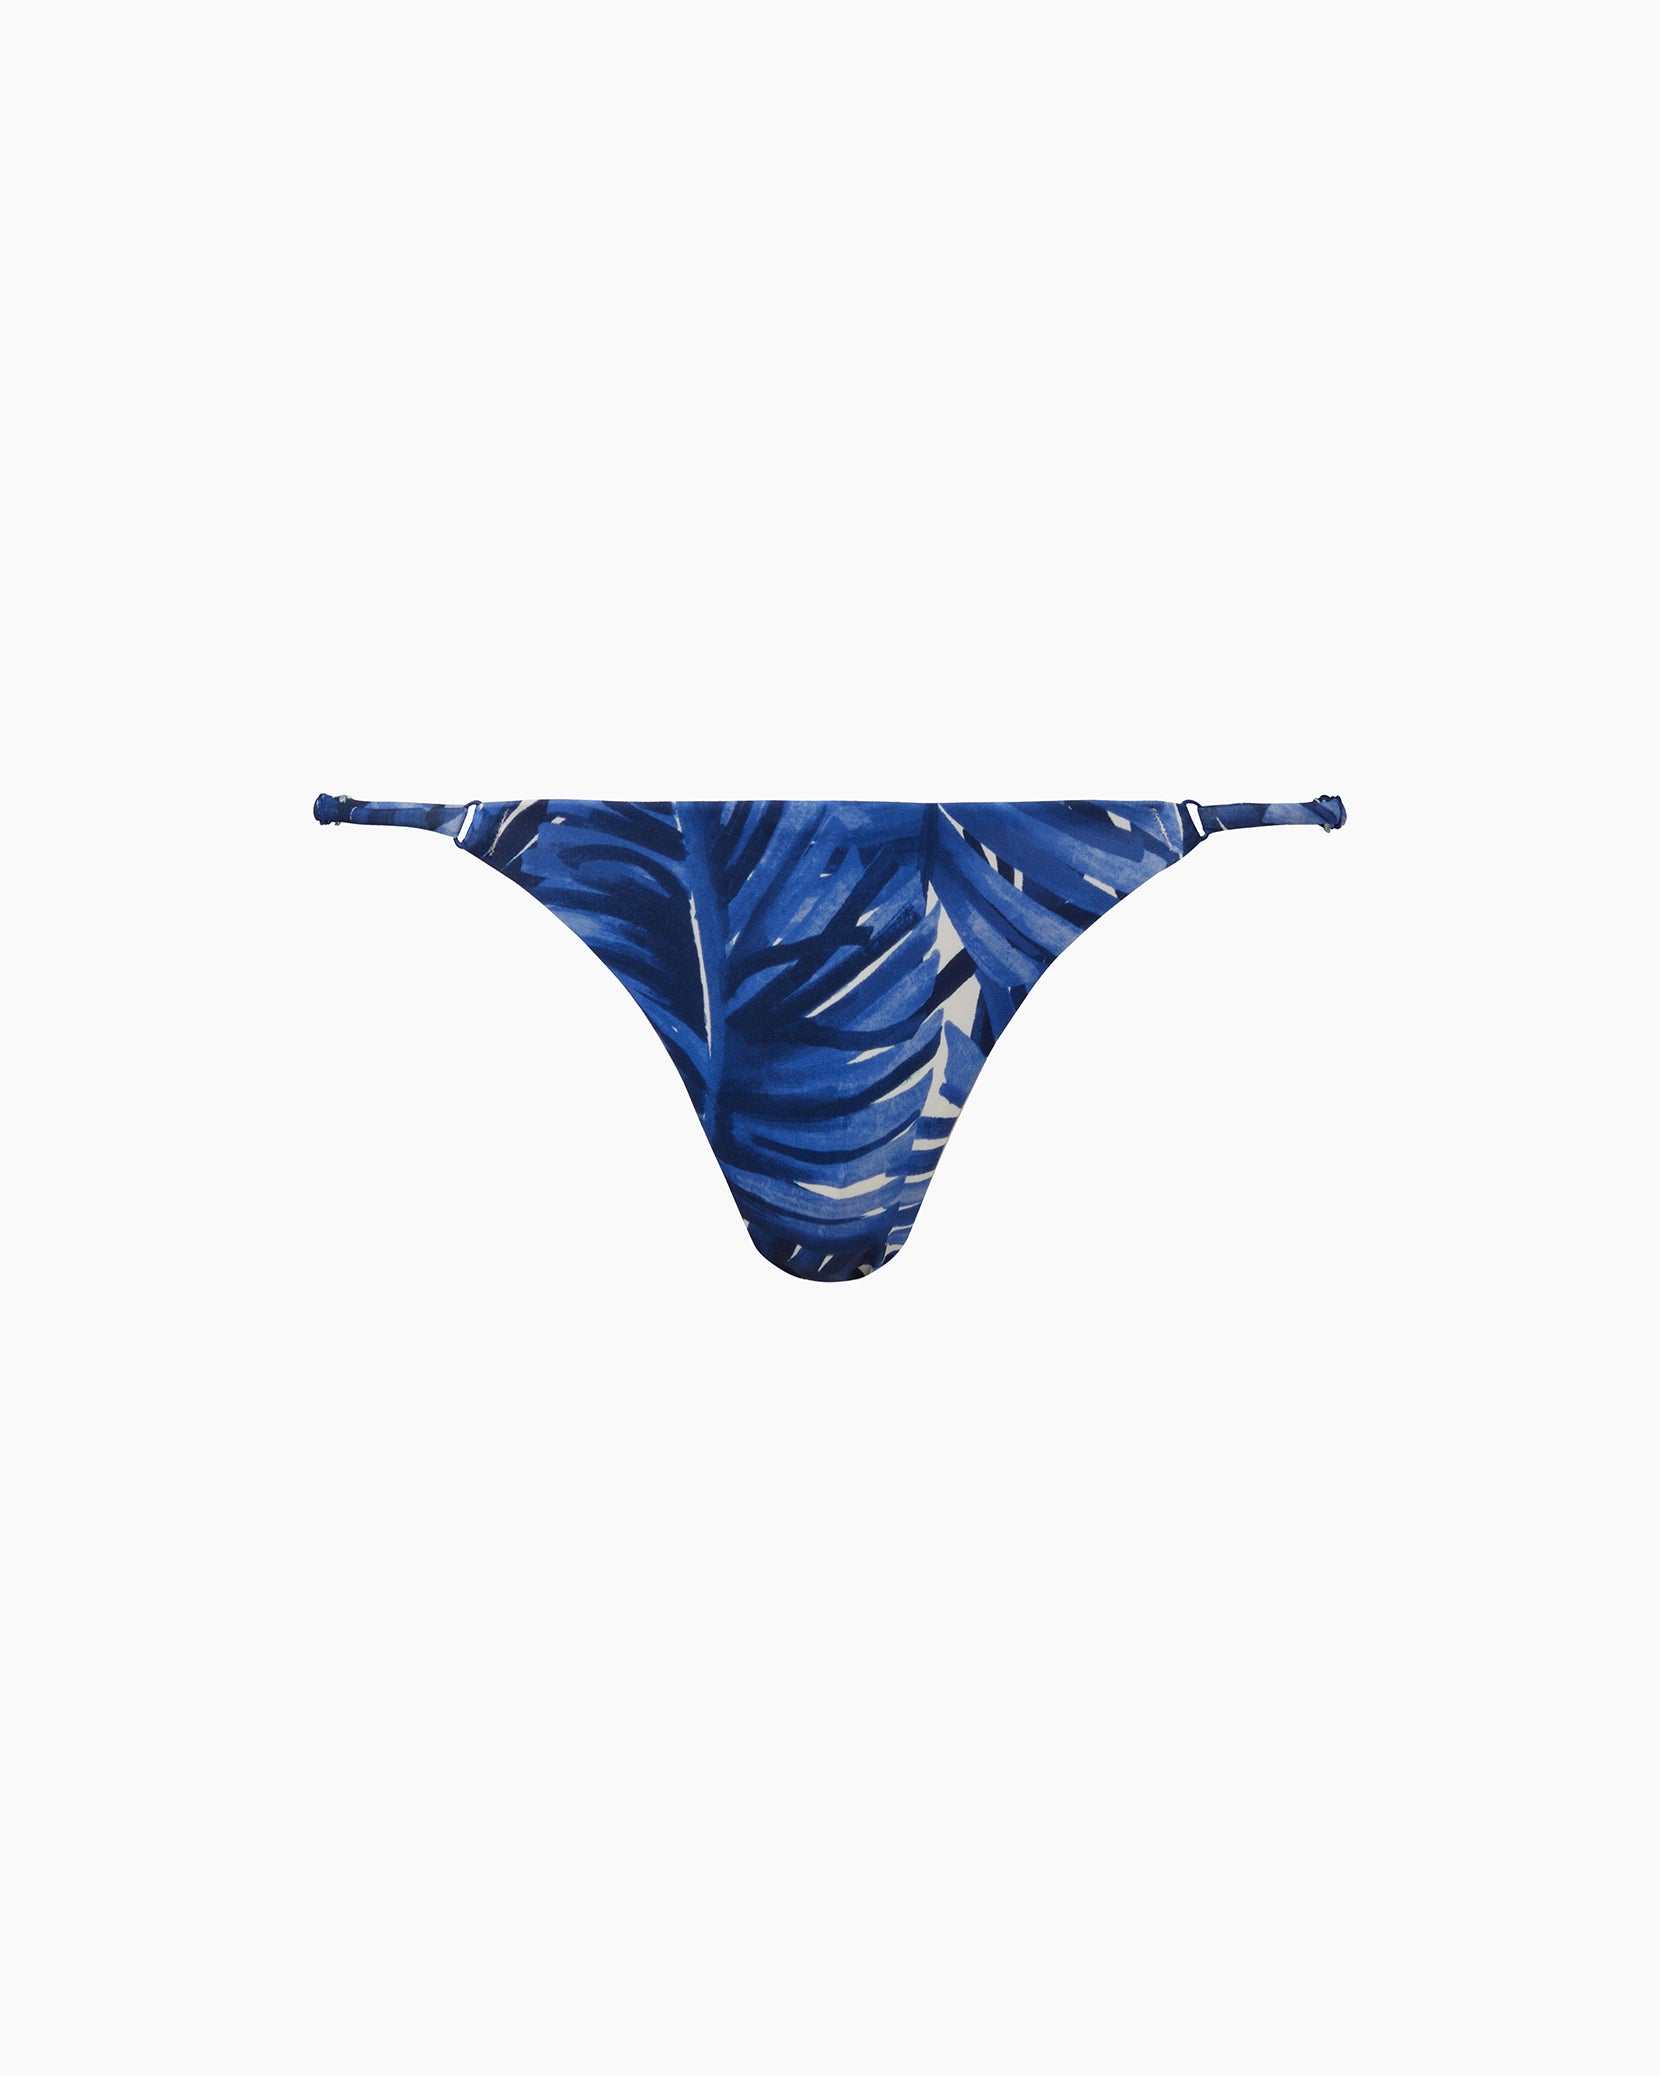 Low-Rise Bottom Bikini - Ultramarine Blue